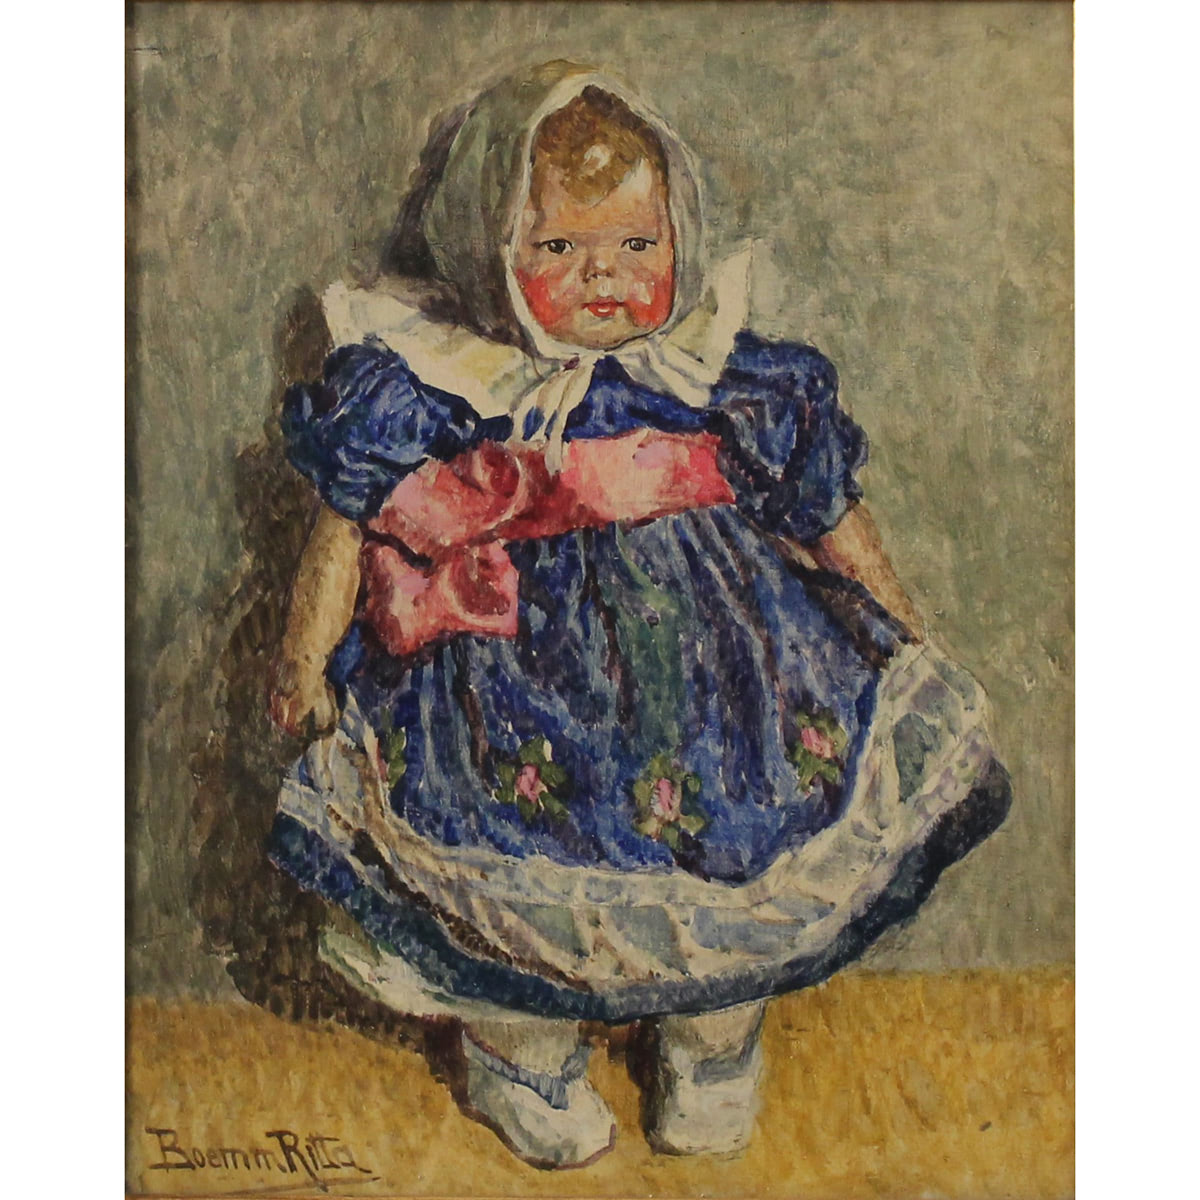 Ritta Boemm (1868/1948) "Figura di bimba" - "Figure of a girl"